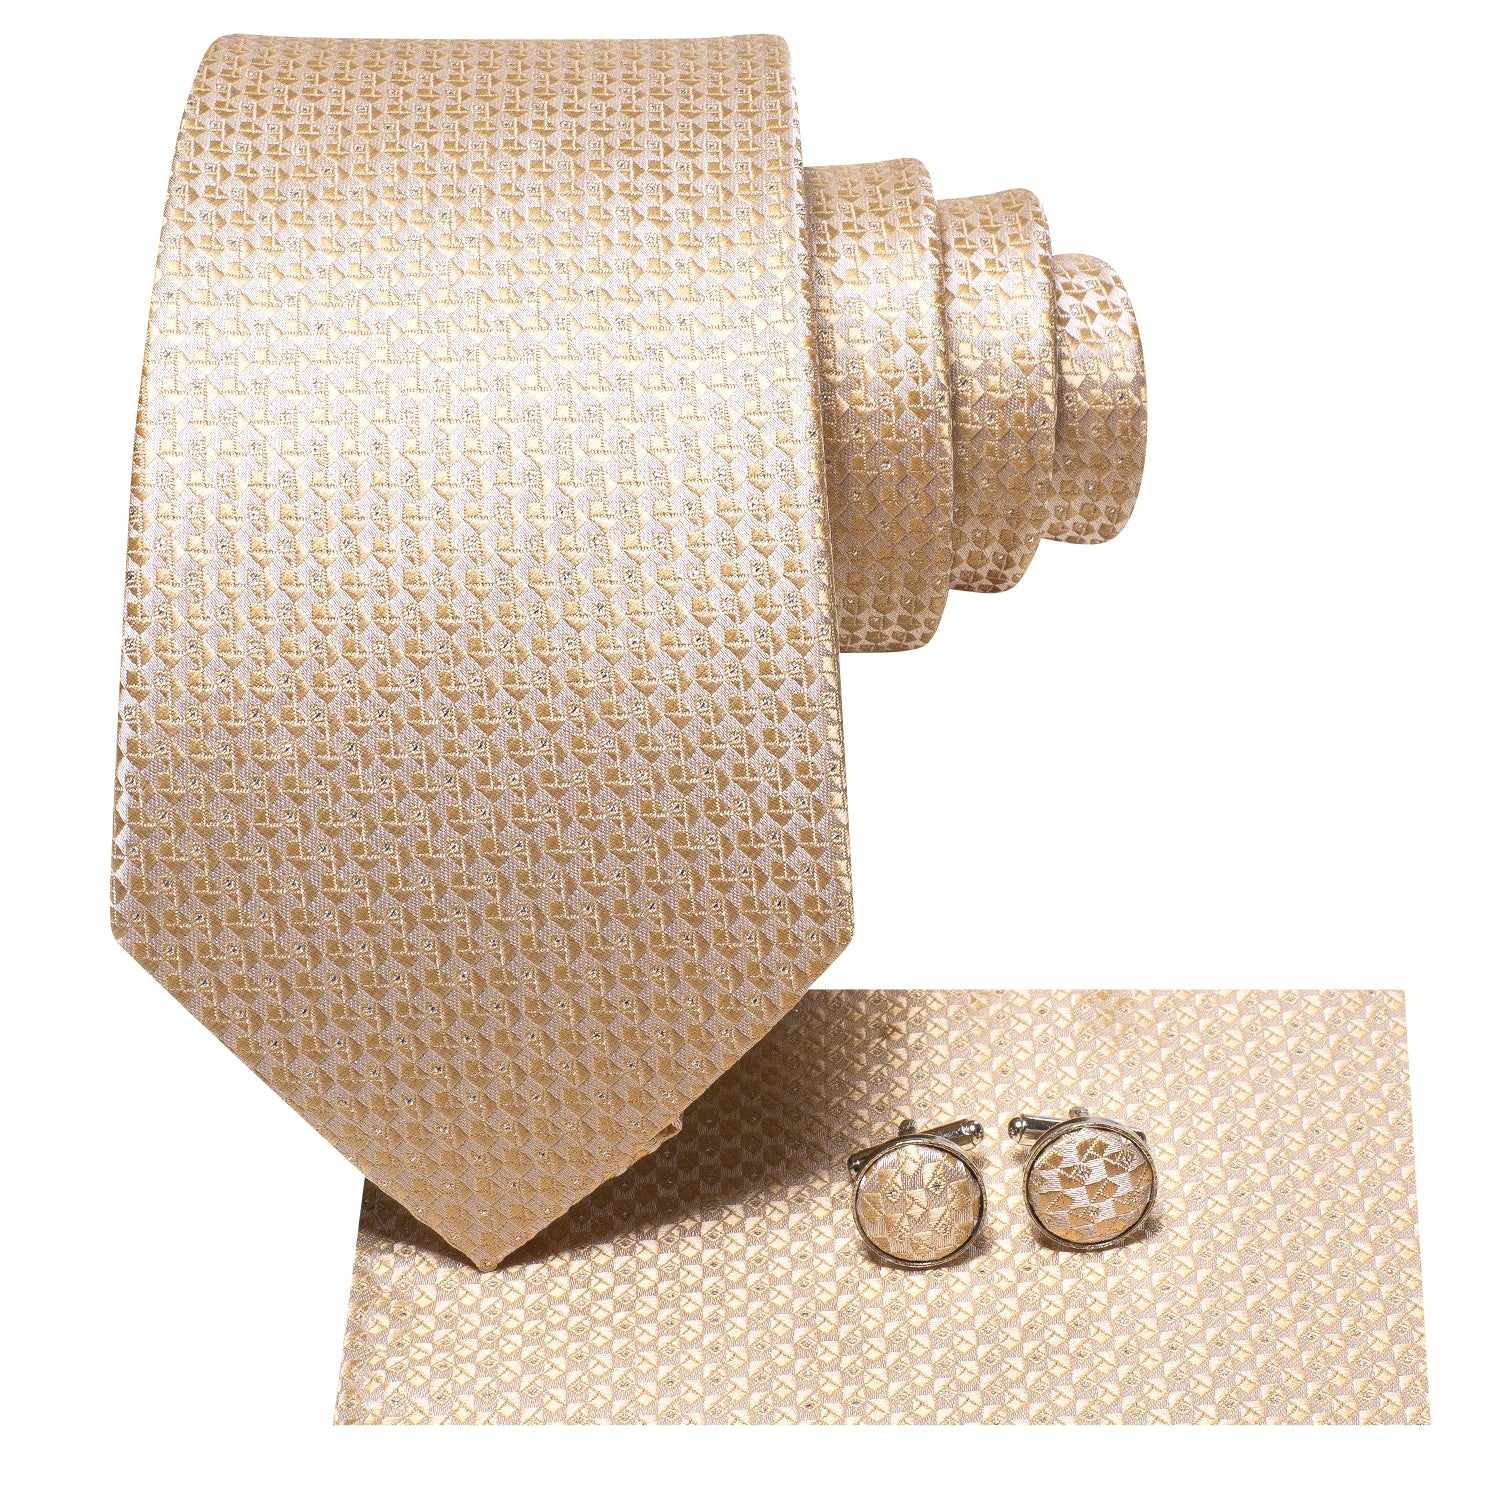 New Champagne Novelty Plaid Tie Pocket Square Cufflinks Set